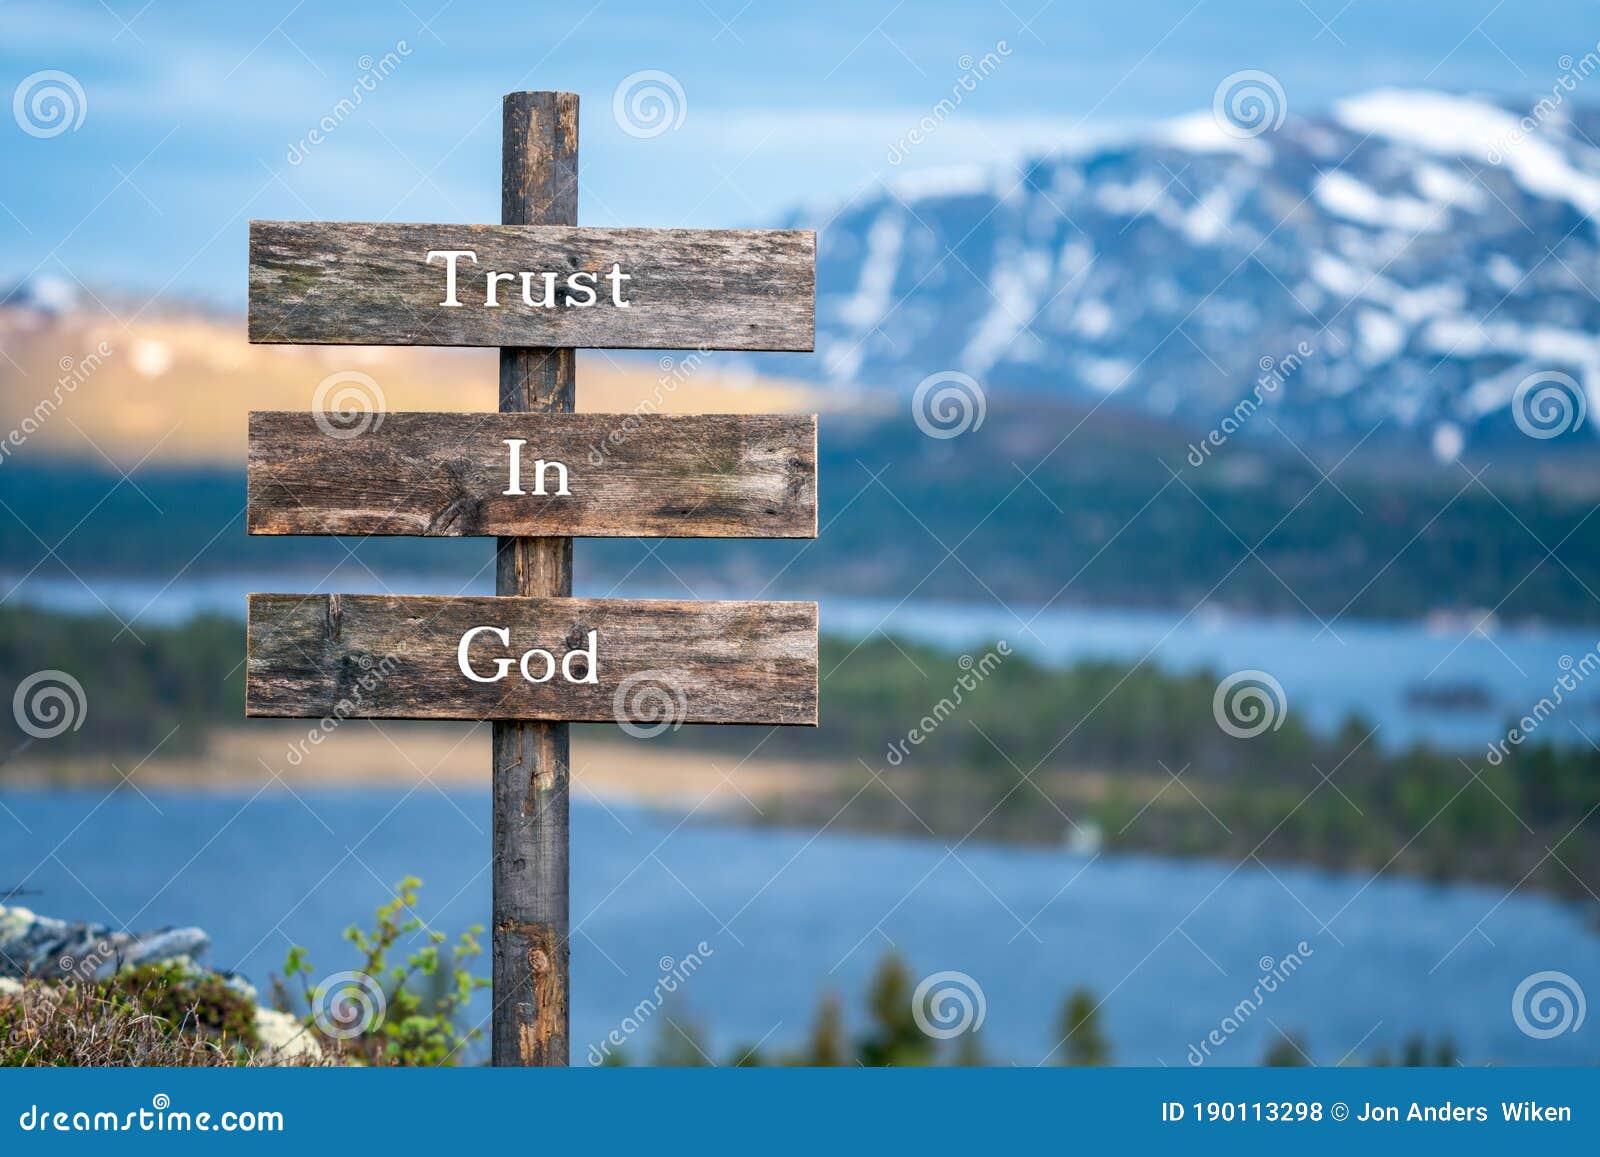 18,481 Trust God Stock Photos - Free & Royalty-Free Stock Photos ...